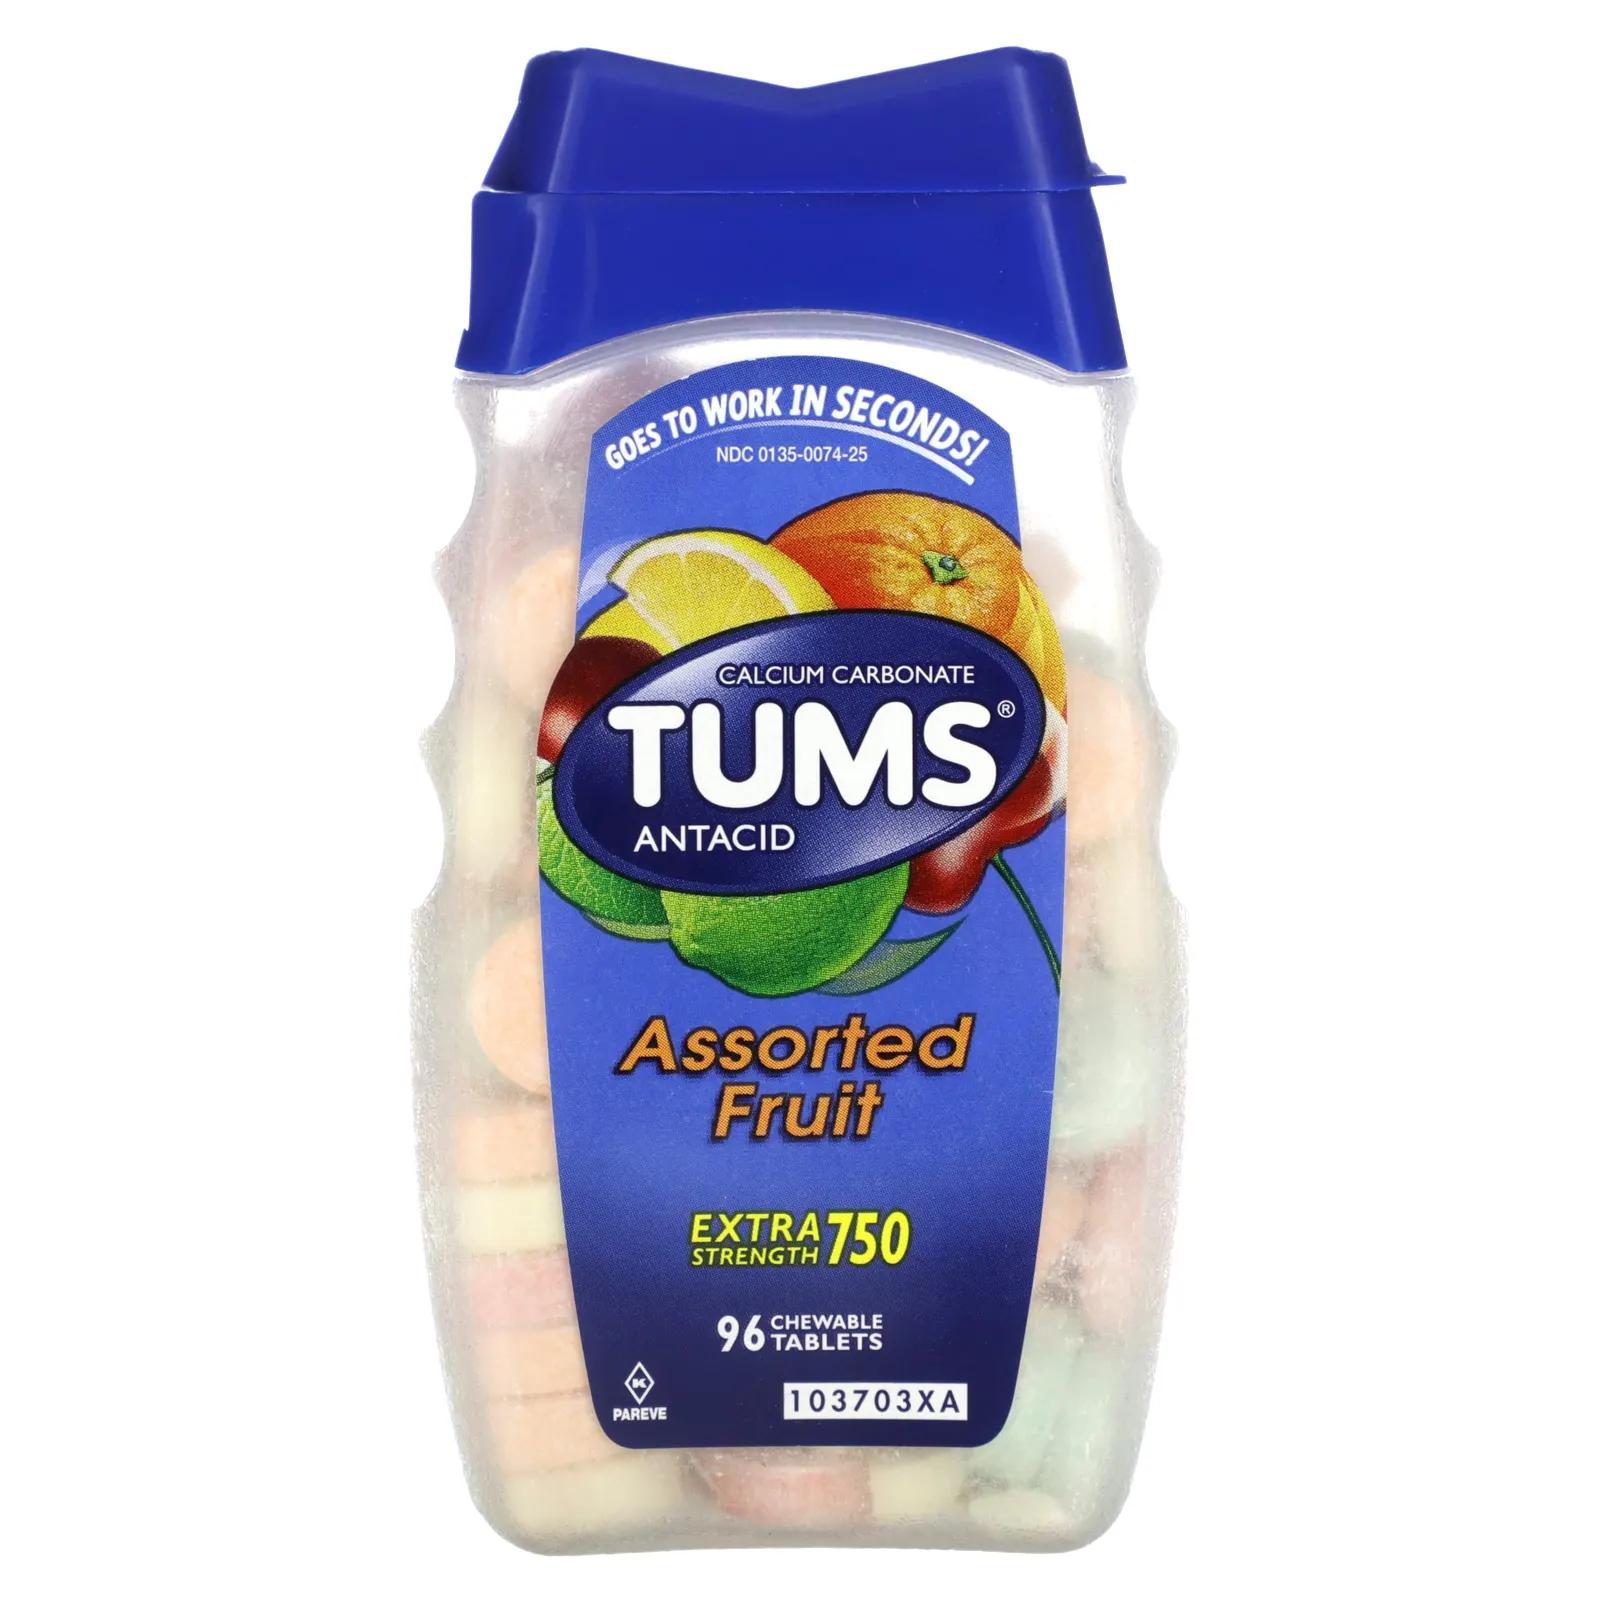 Tums TUMS Extra Strength 750 Антацидное средство Фруктовое ассорти 96 таблеток антацидная добавка tums extra strength фруктовое ассорти 96 жевательных таблеток